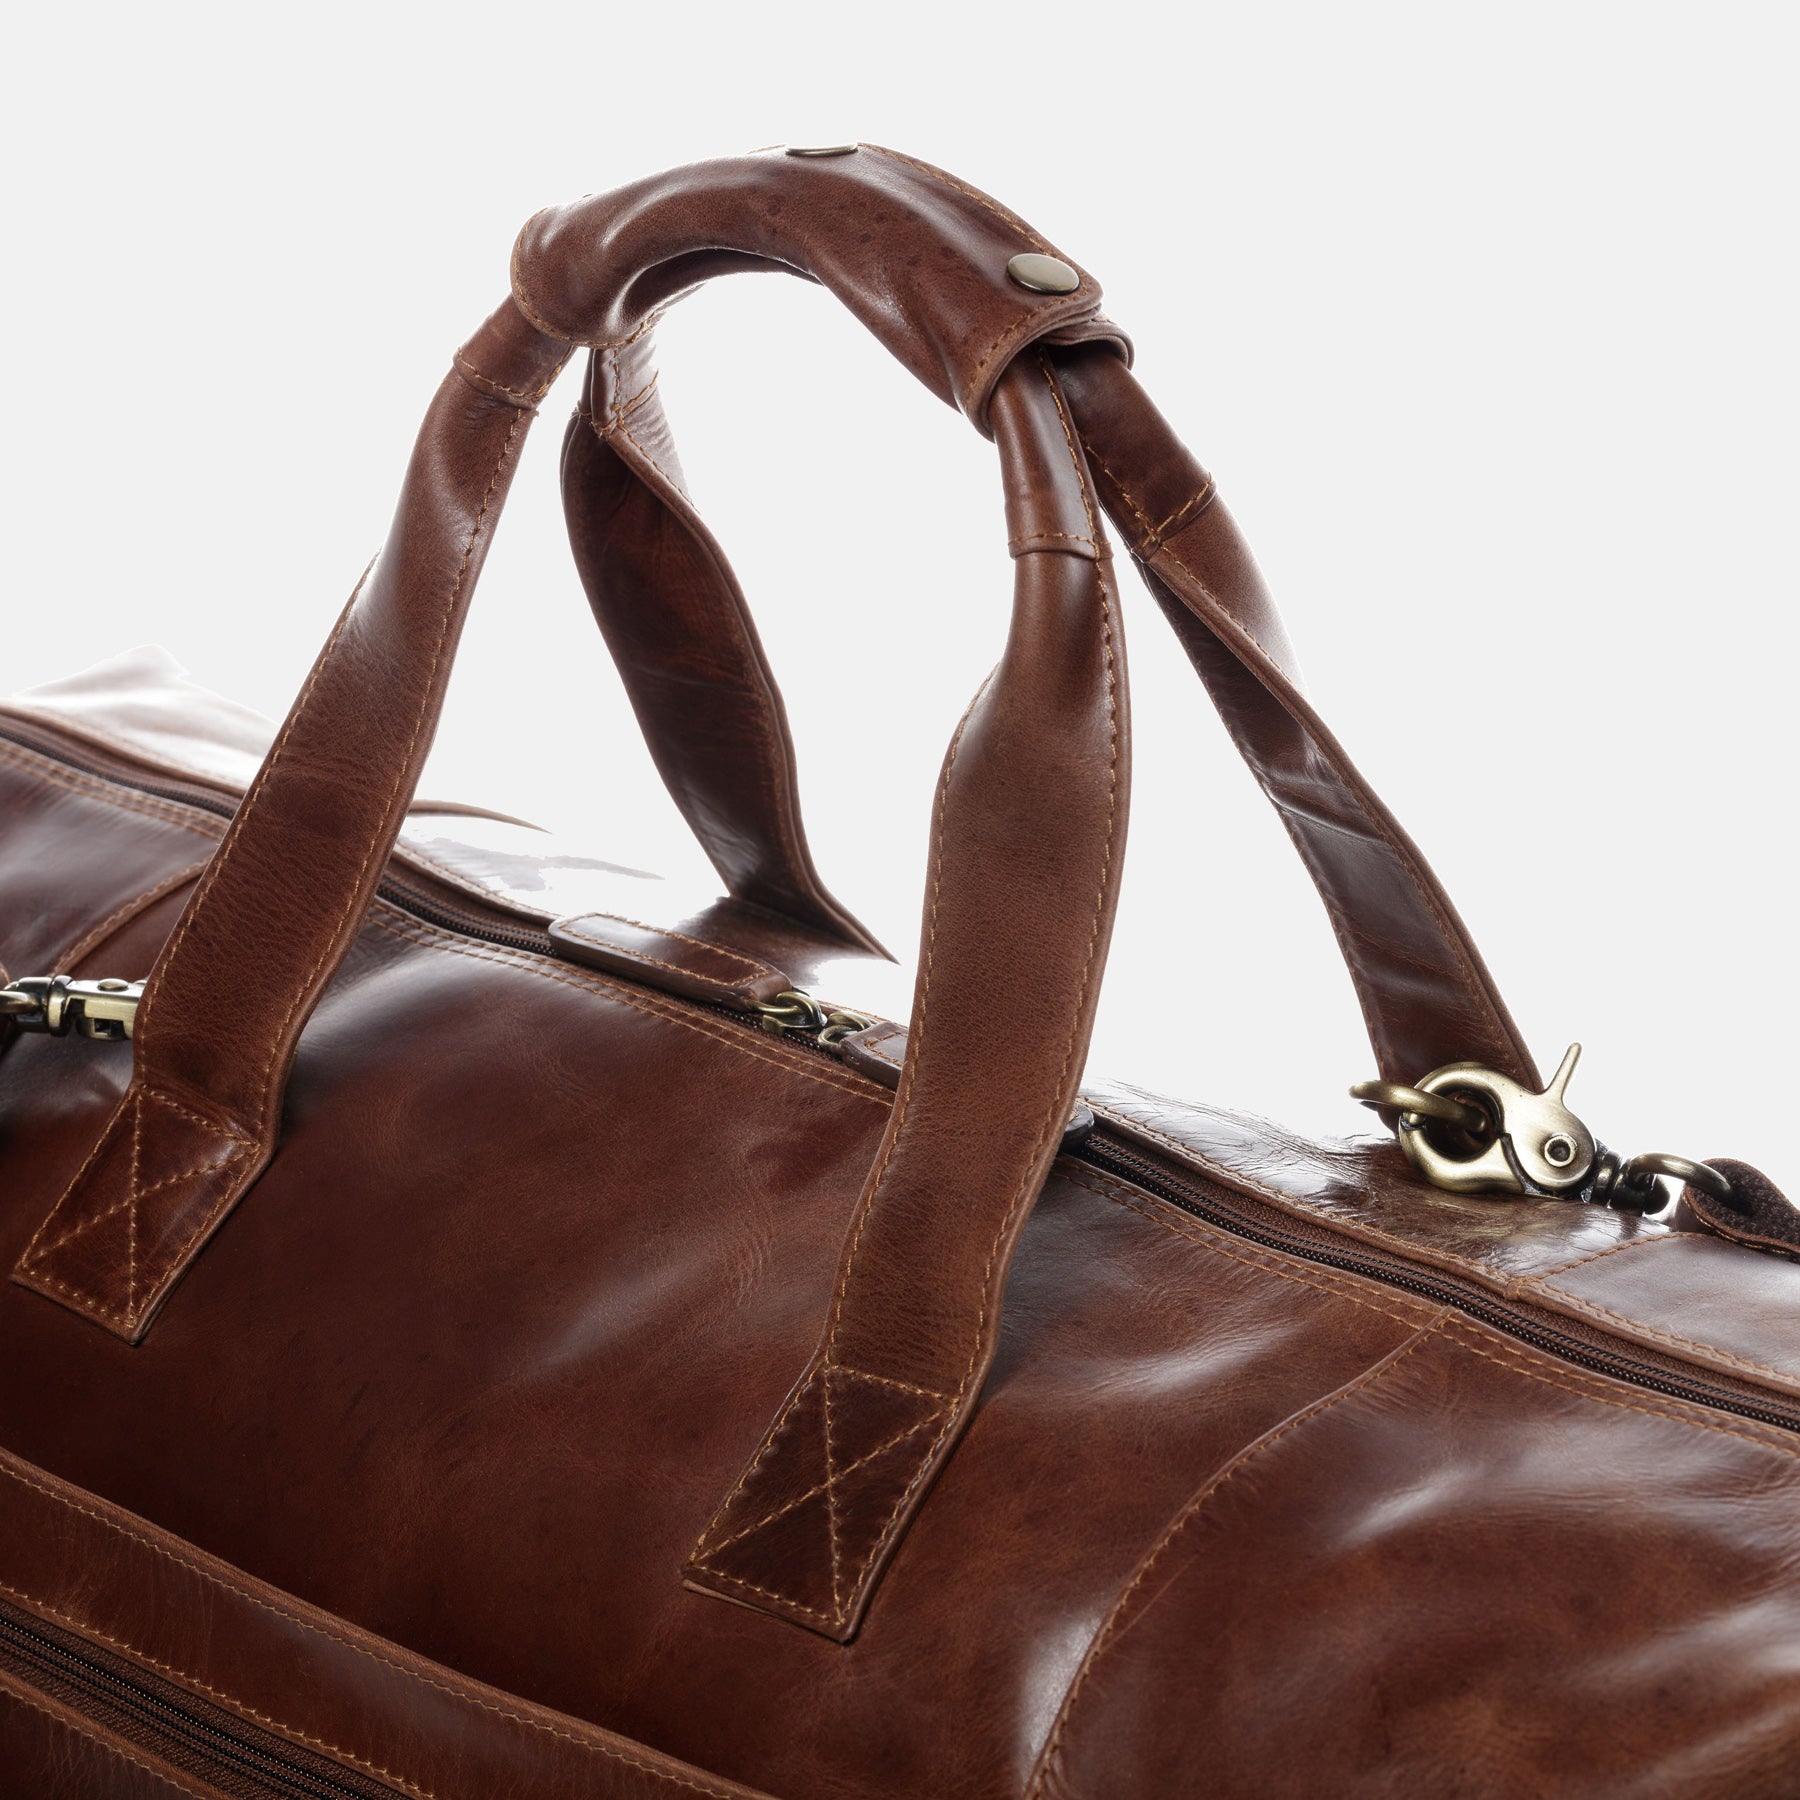 Travel bag BRISTOL natural leather brown-cognac